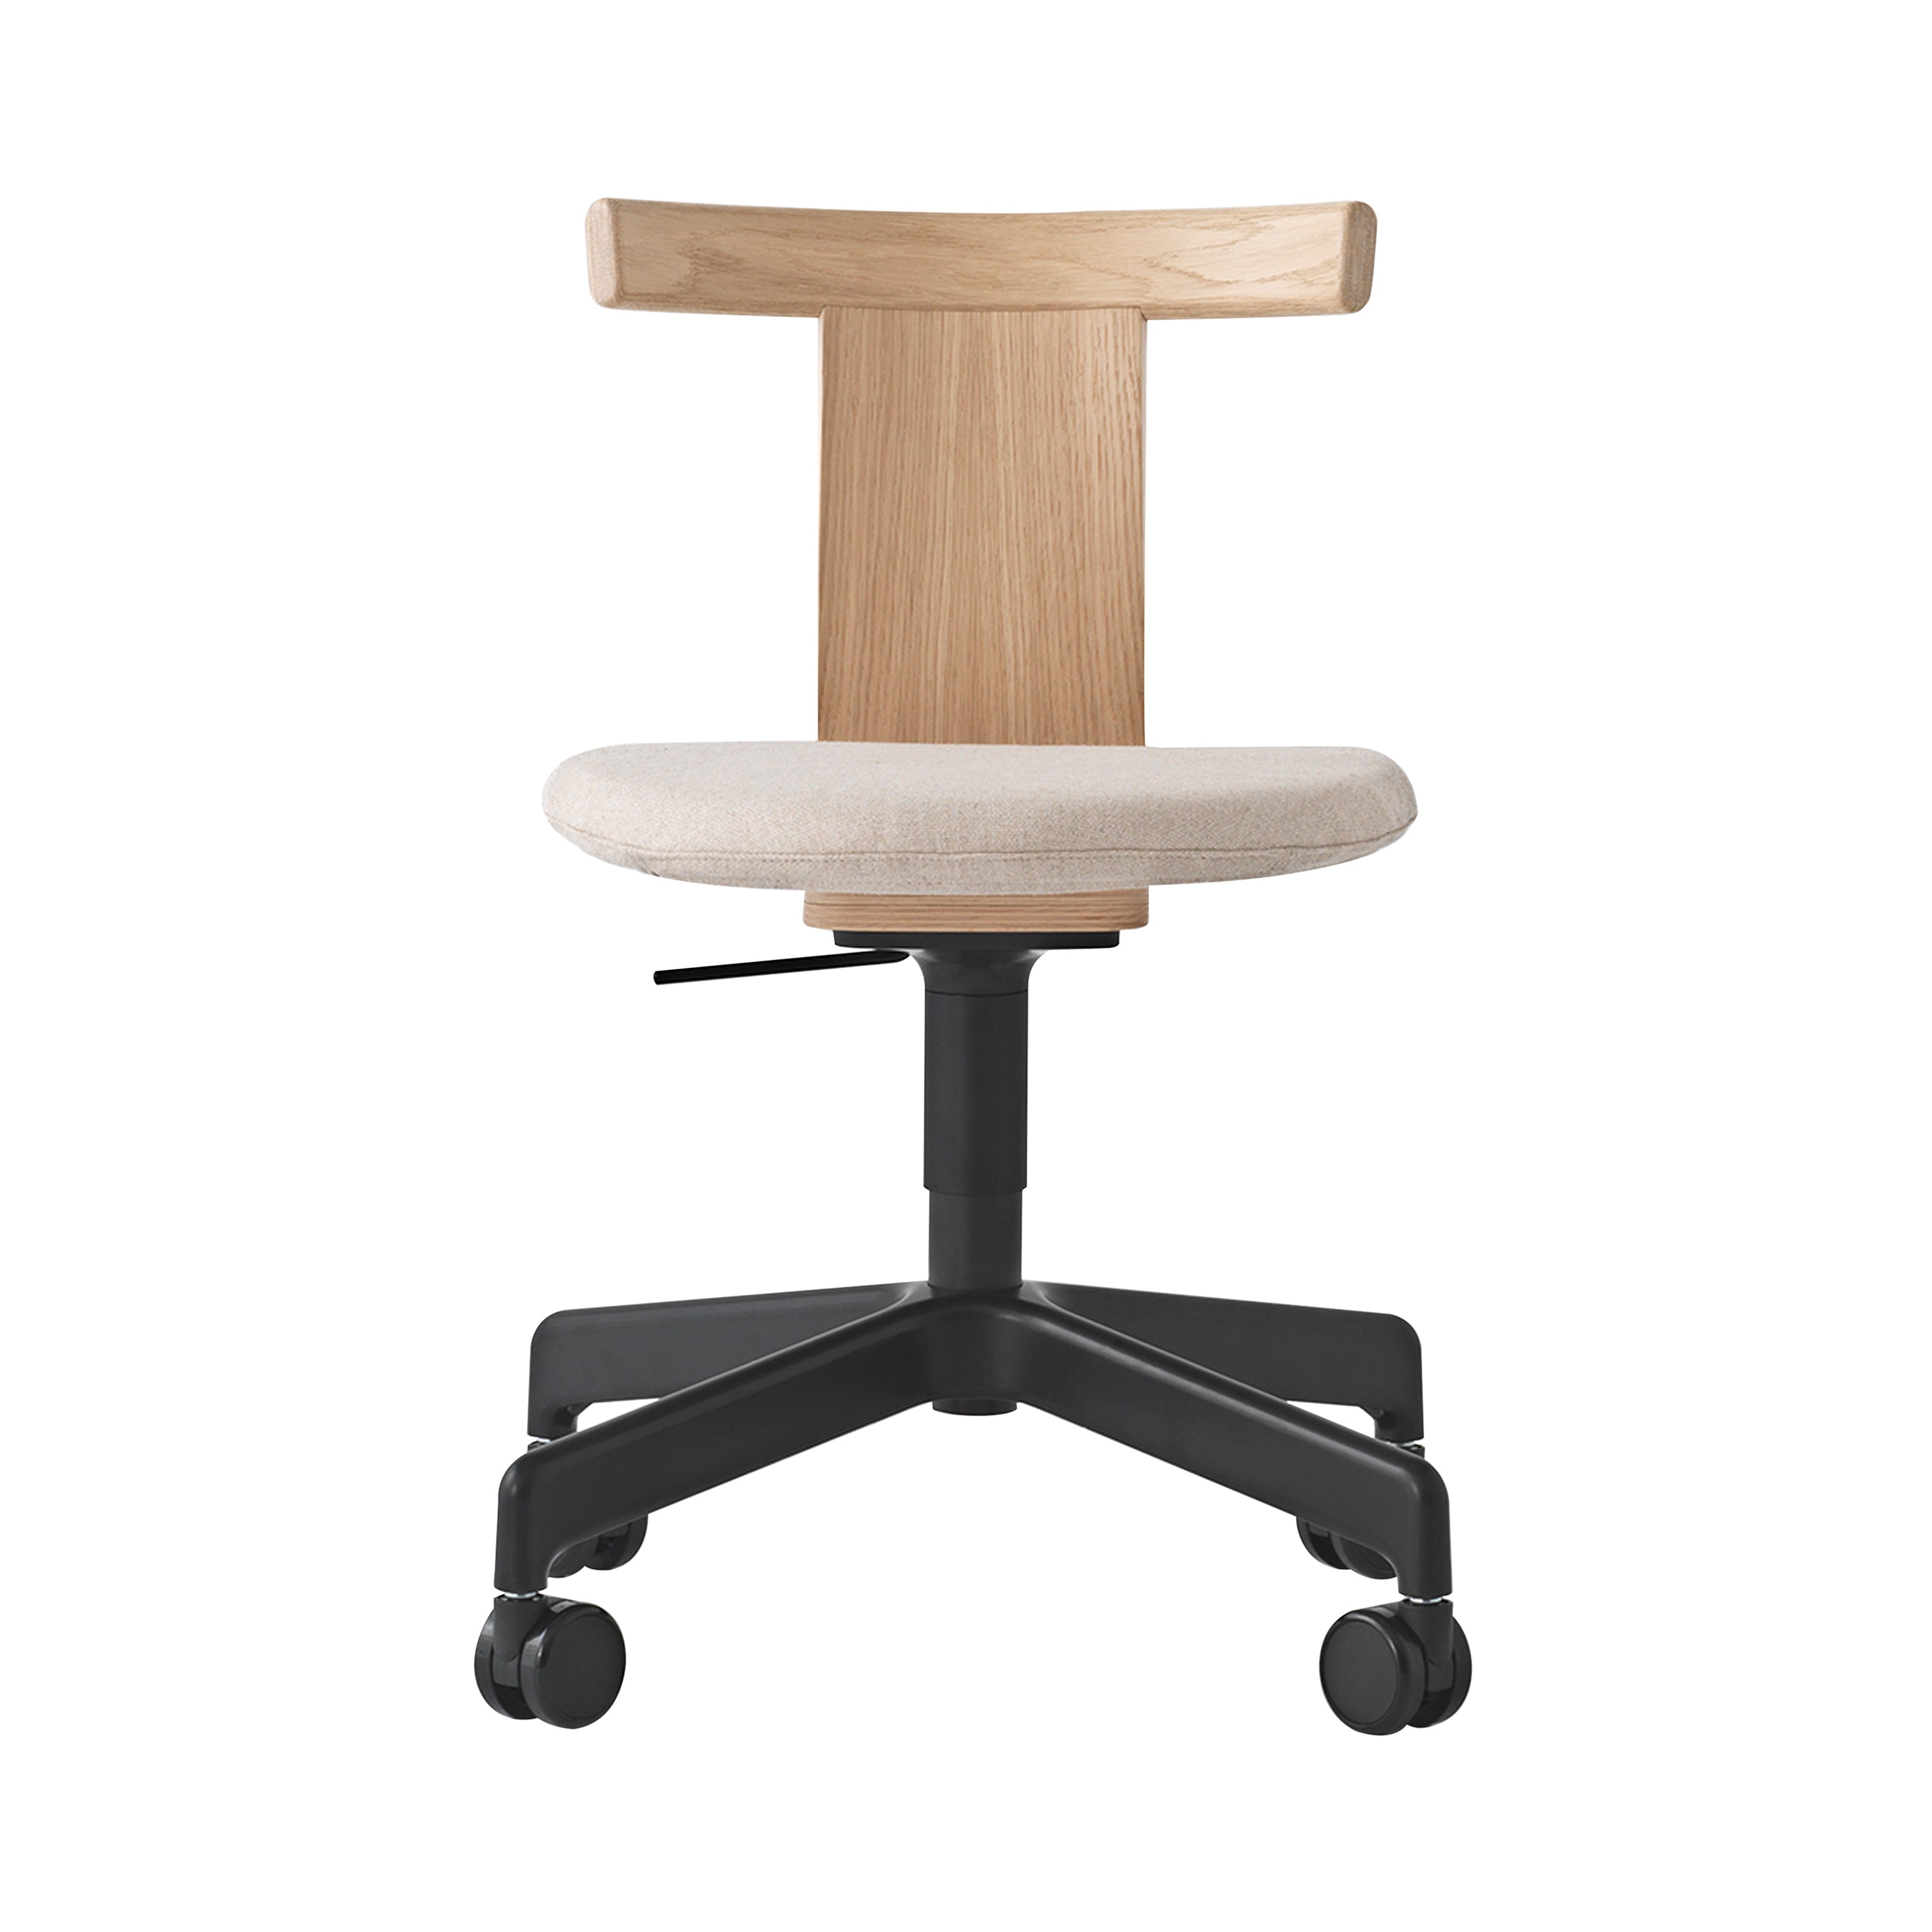 Jiro Swivel Chair: Upholstered + Natural Oak + Black + With Castors